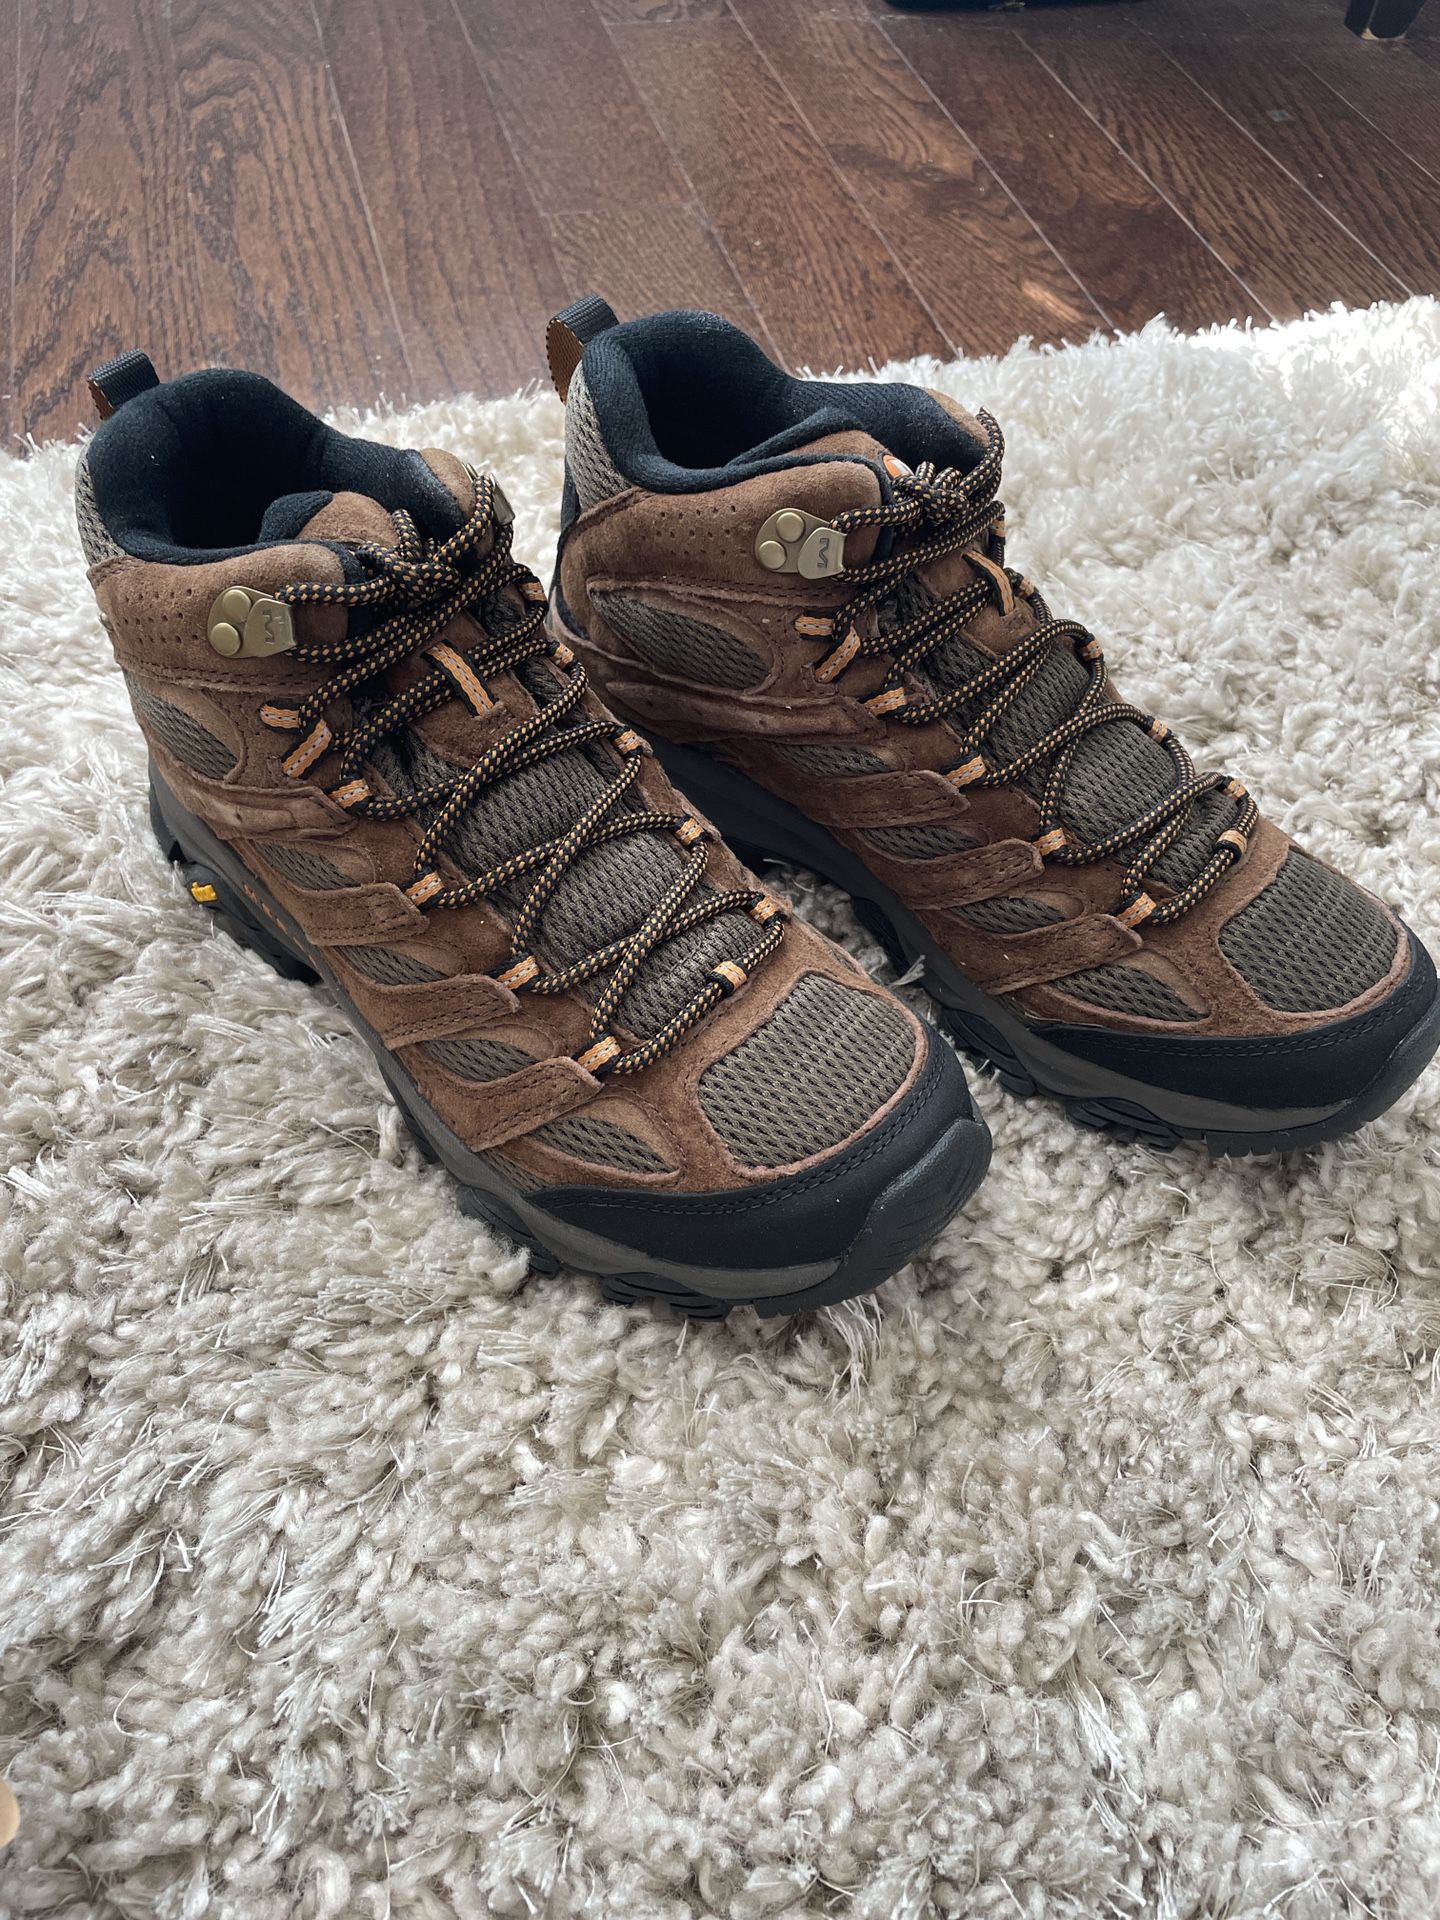 Men’s Merrell Waterproof Hiking Boots - 1 Pair $150 For Both